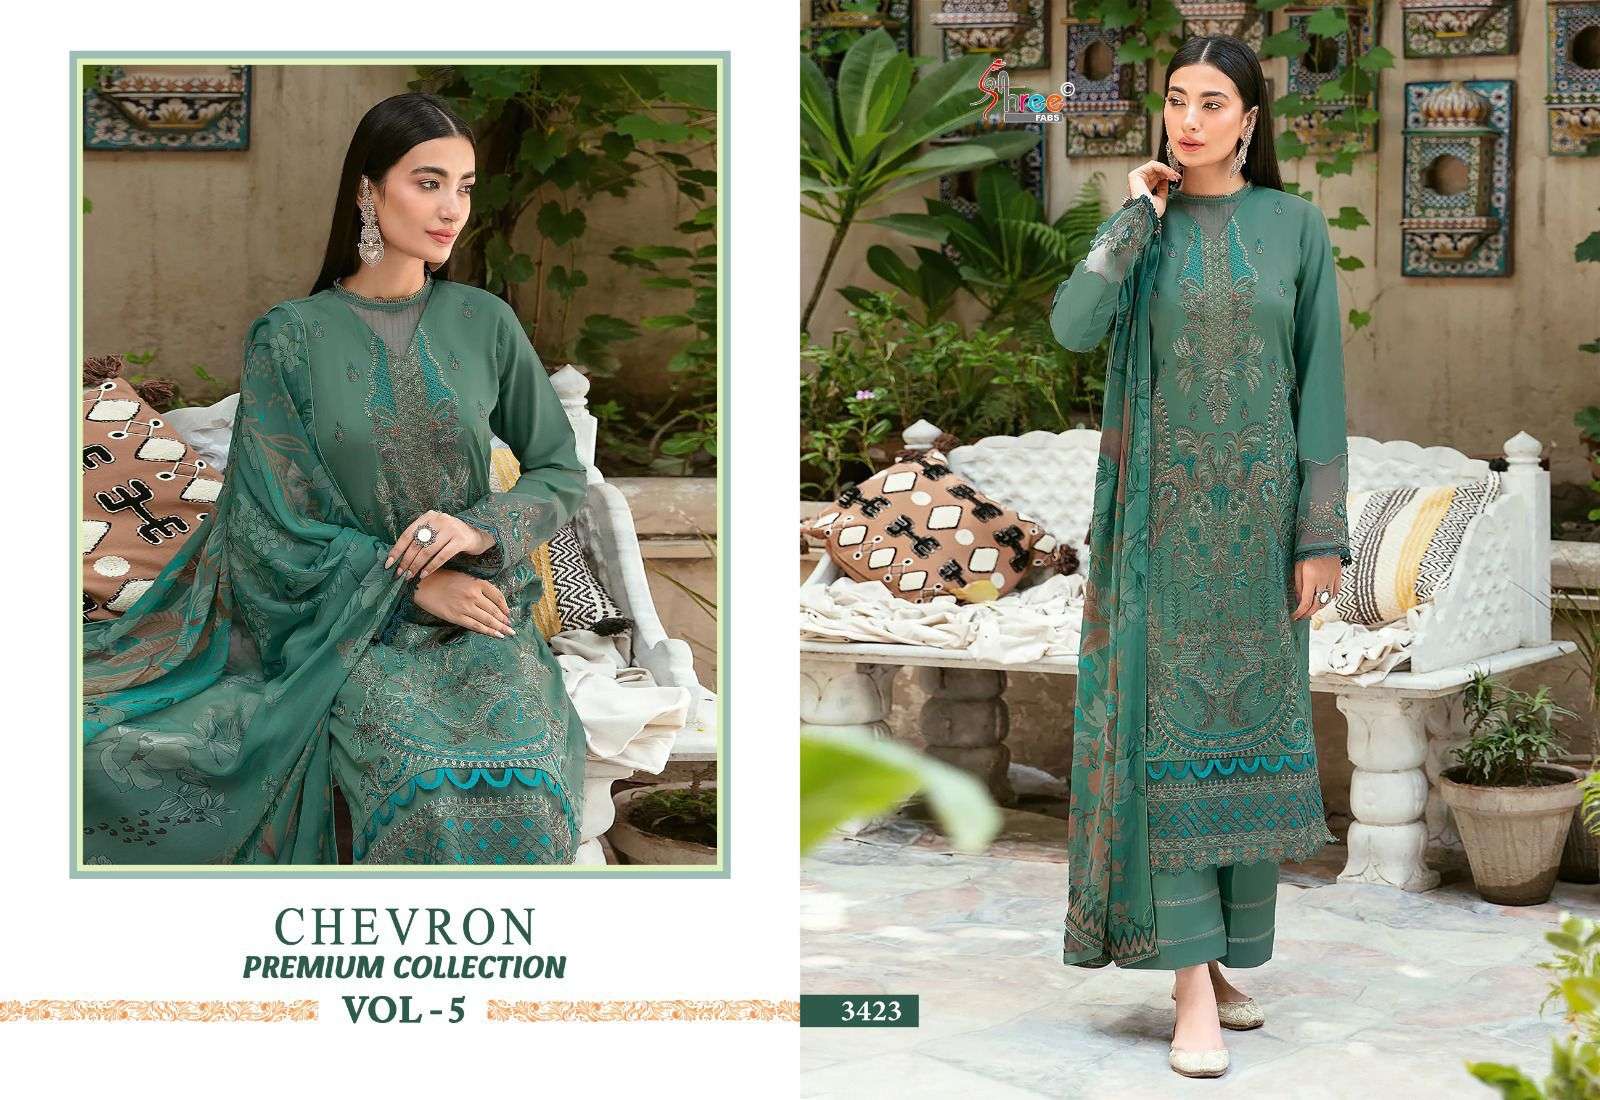 Chevron Premium Collection Vol 5 Buy Shree Fabs Online Wholesaler Latest Collection Unstitched Salwar Suit Set